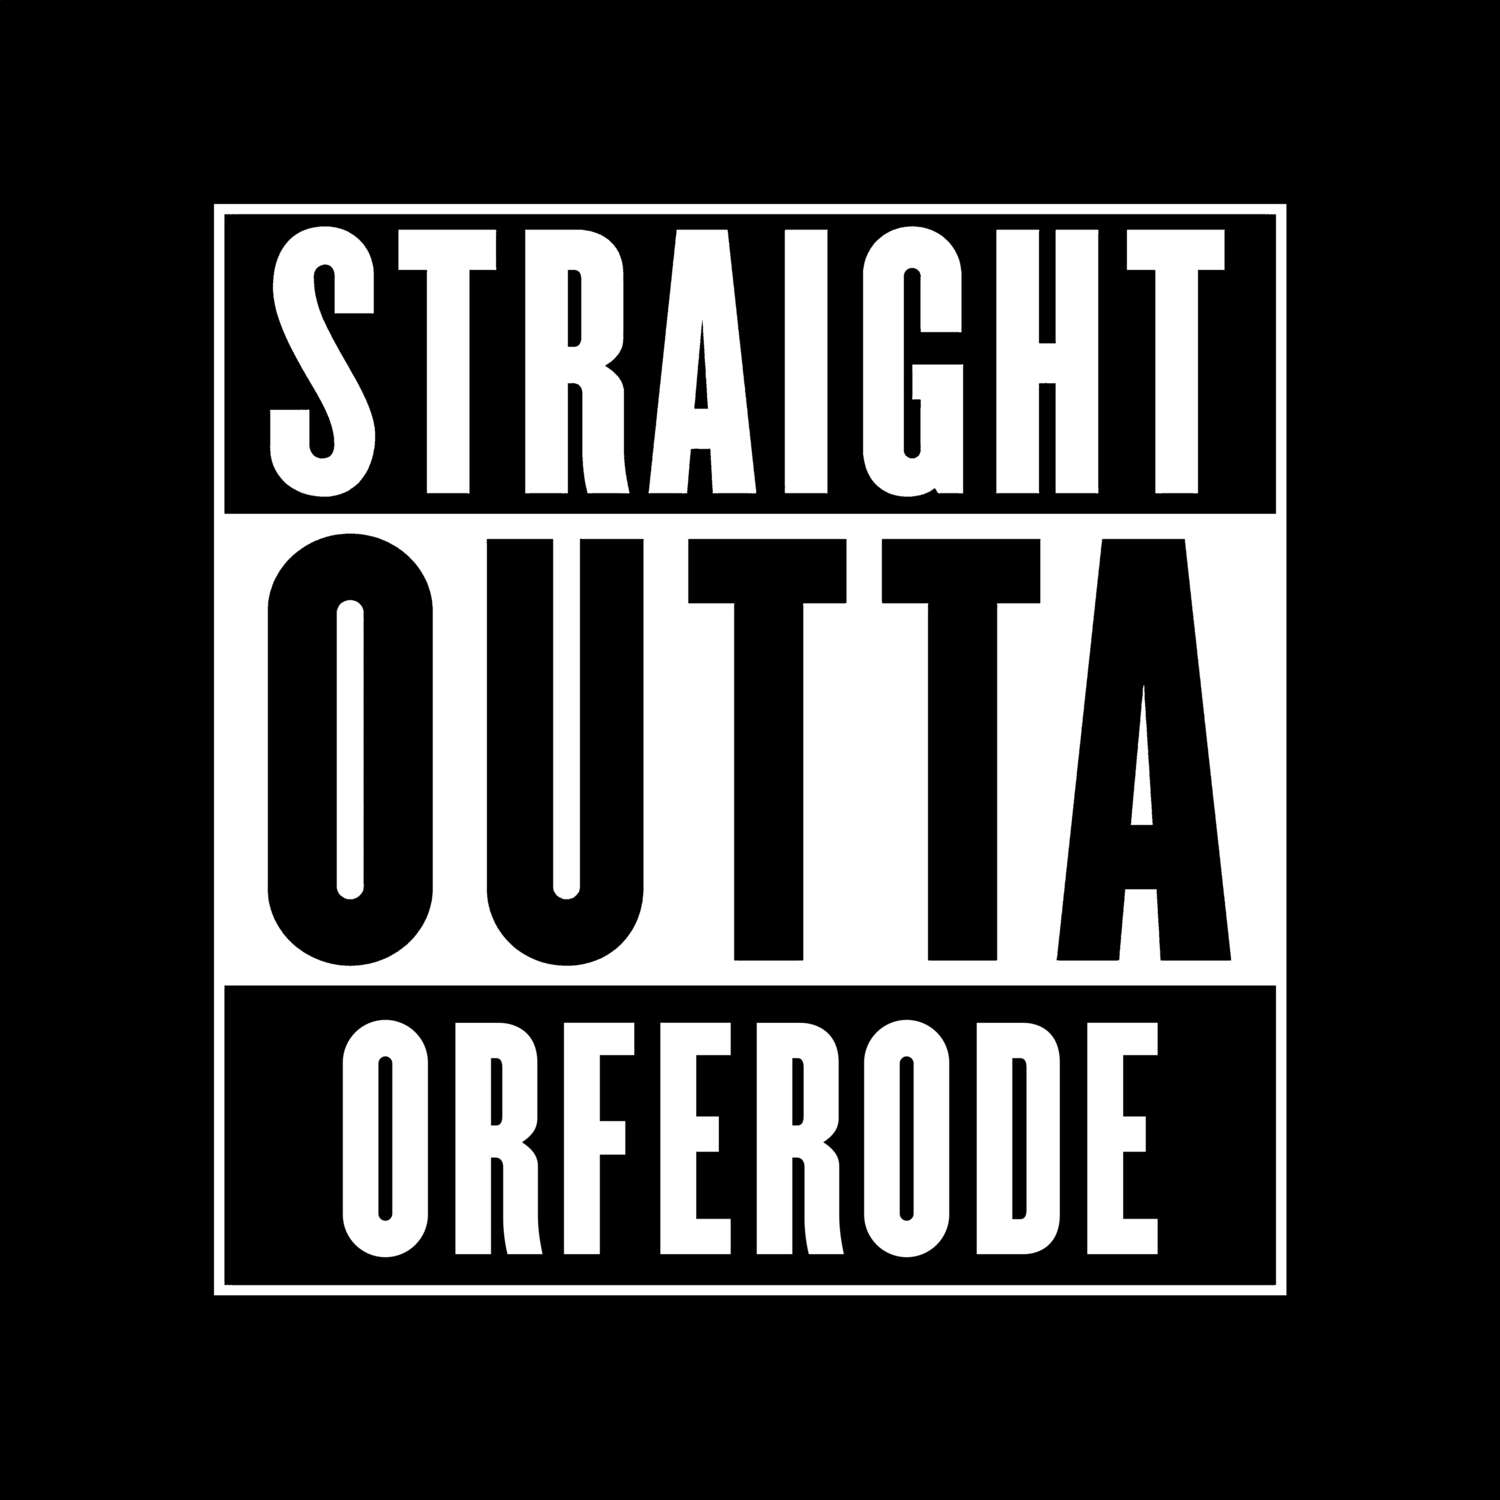 Orferode T-Shirt »Straight Outta«